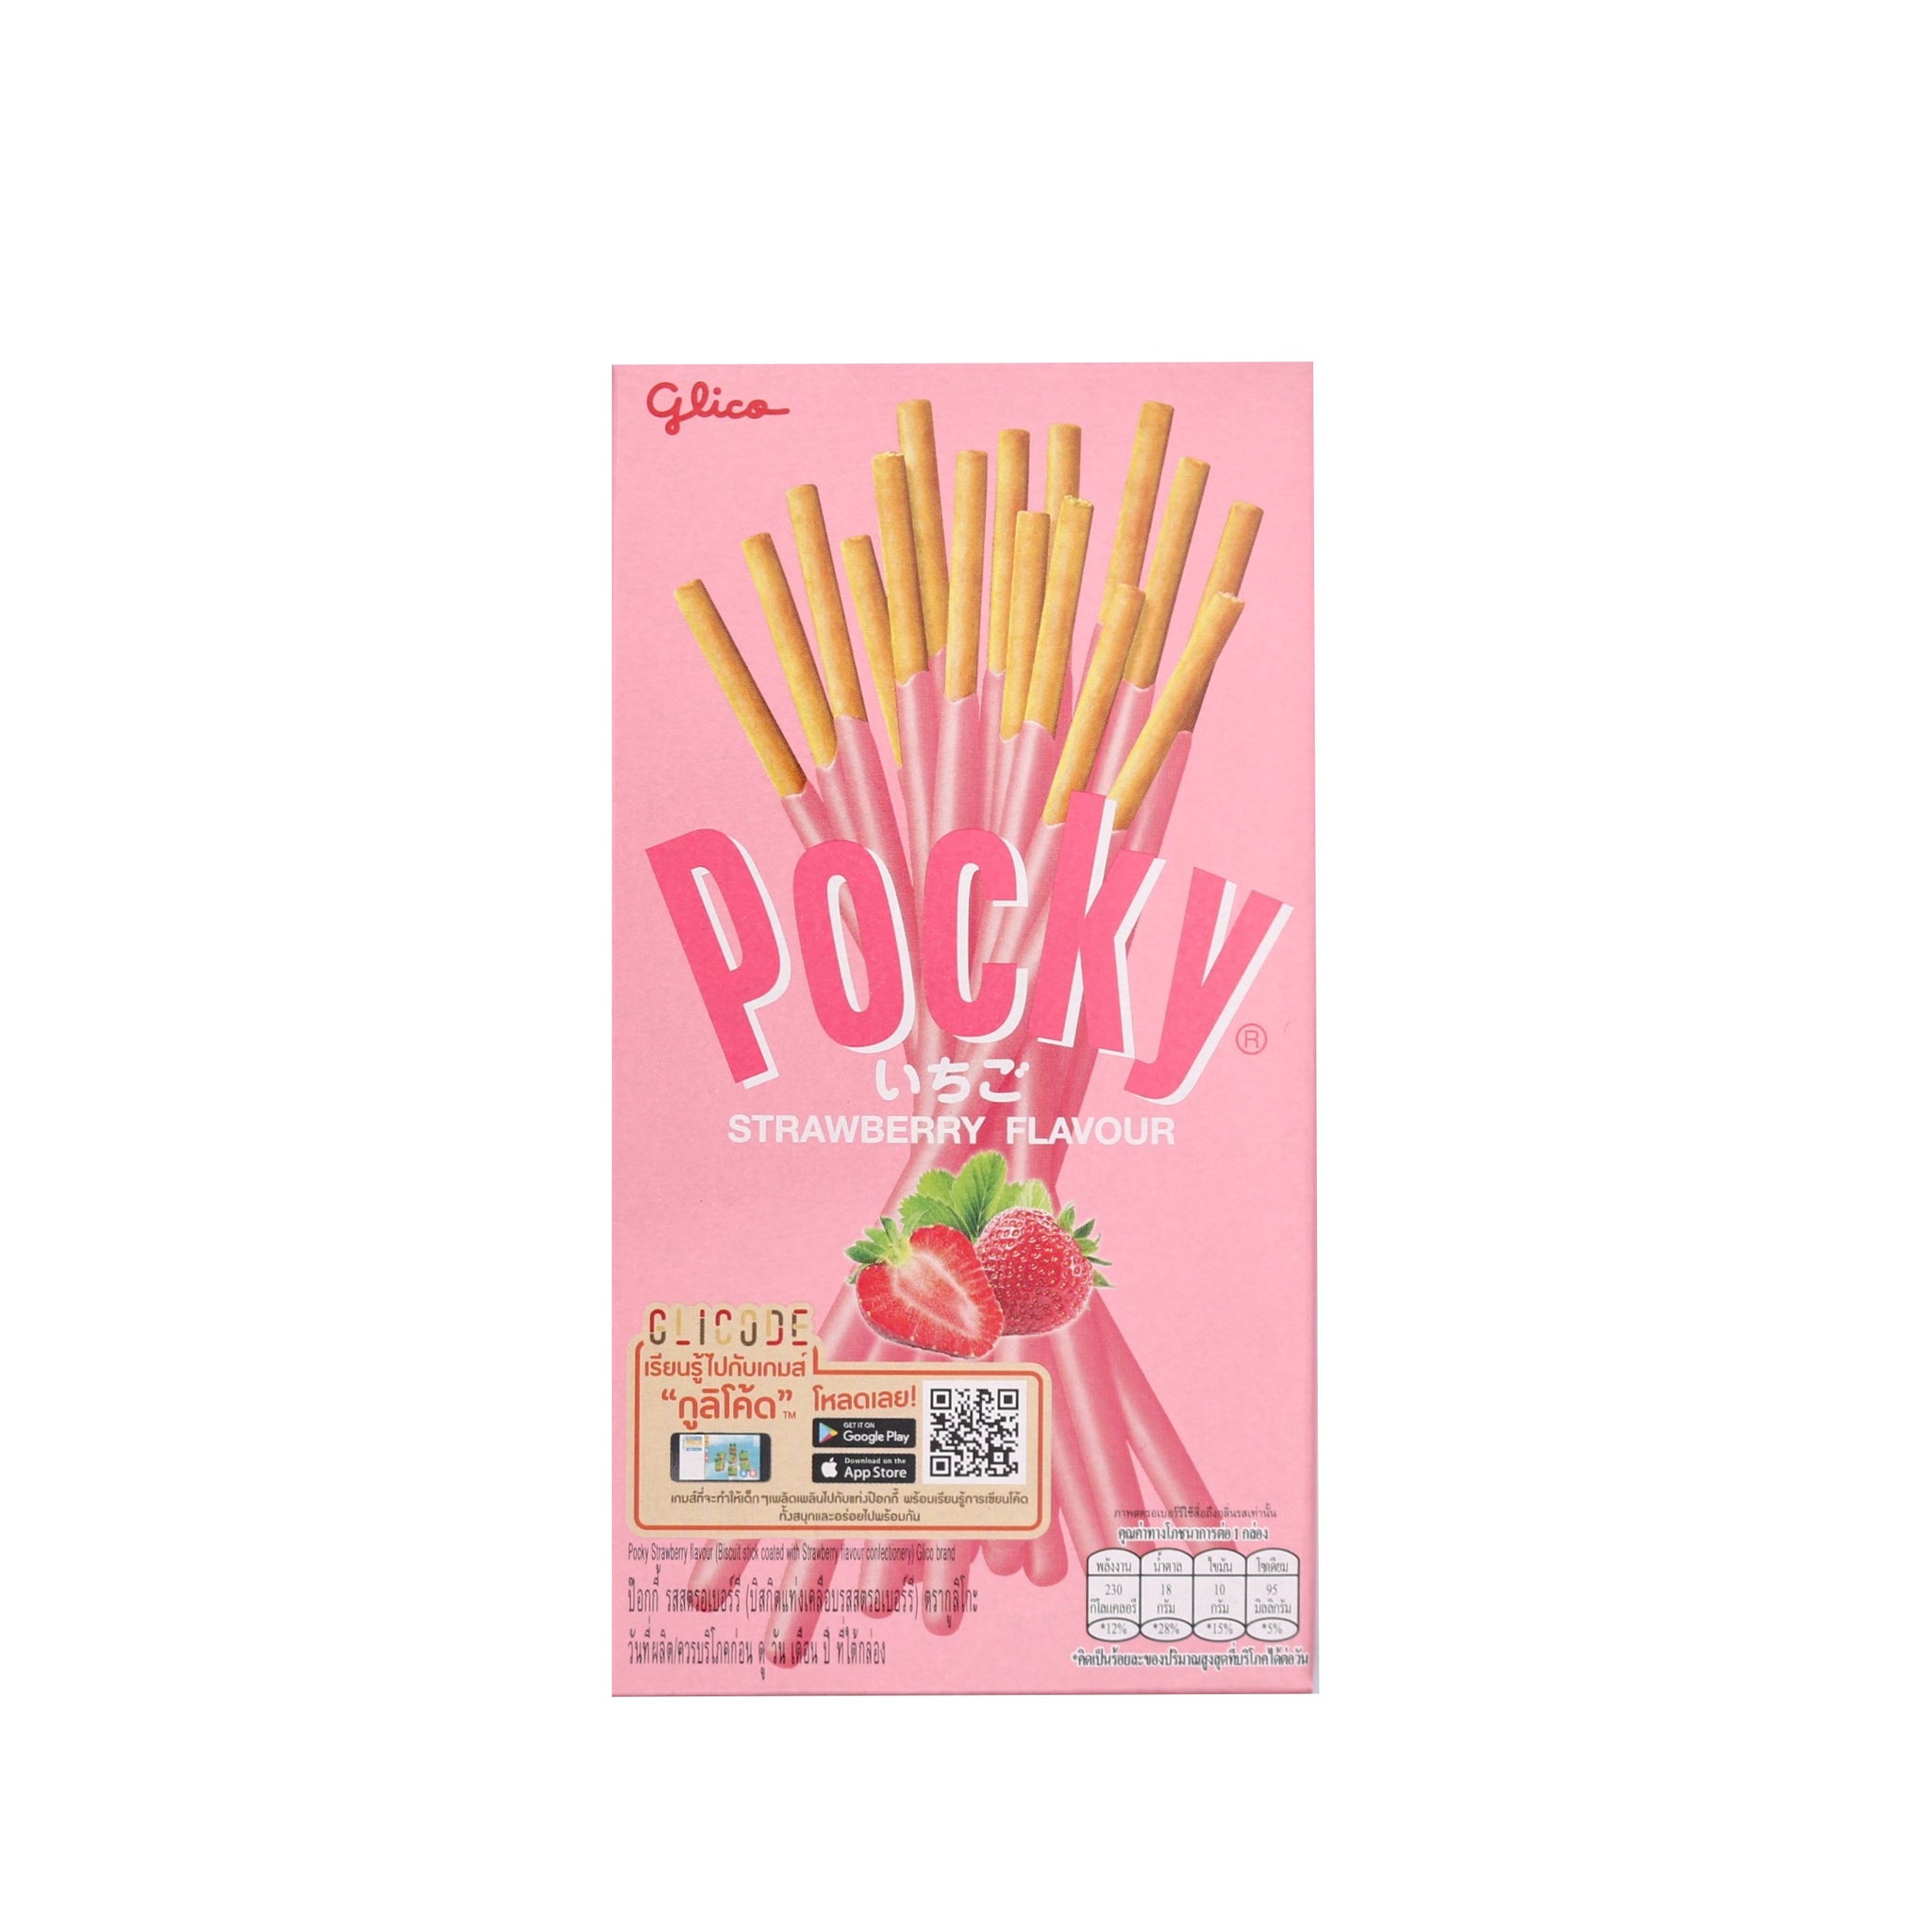 Glico Biscuit Pocky Strawberry Box 45G